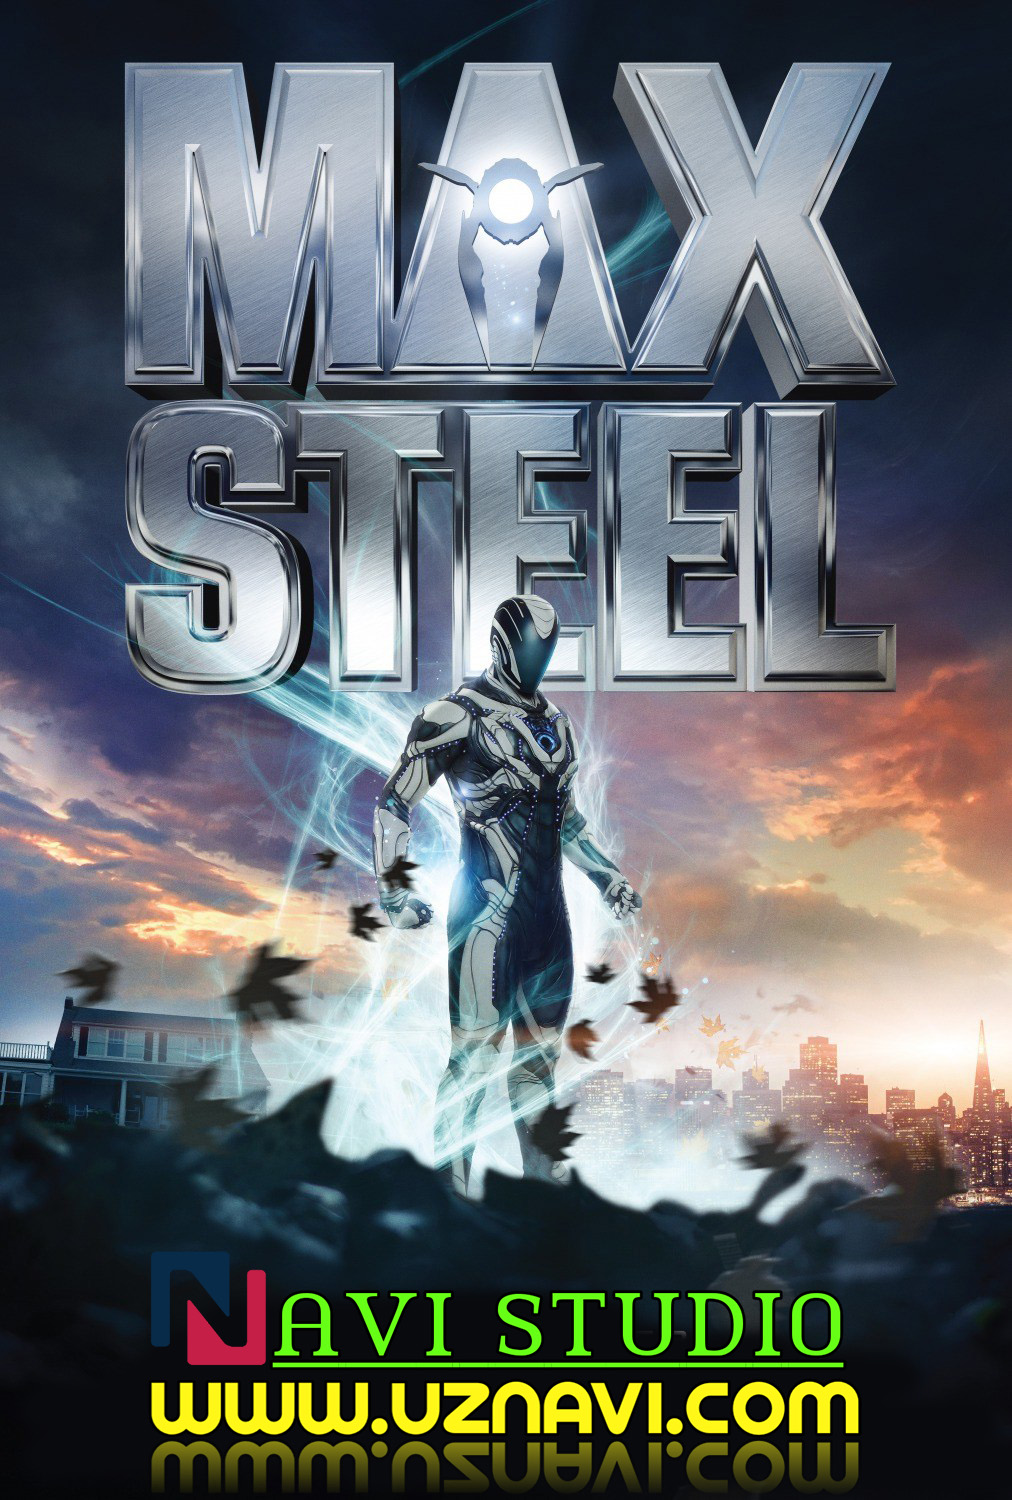 Maks Steel (O'zbek tilida fantastika boyvik)HD  Макс Стил  таржима кино 2016